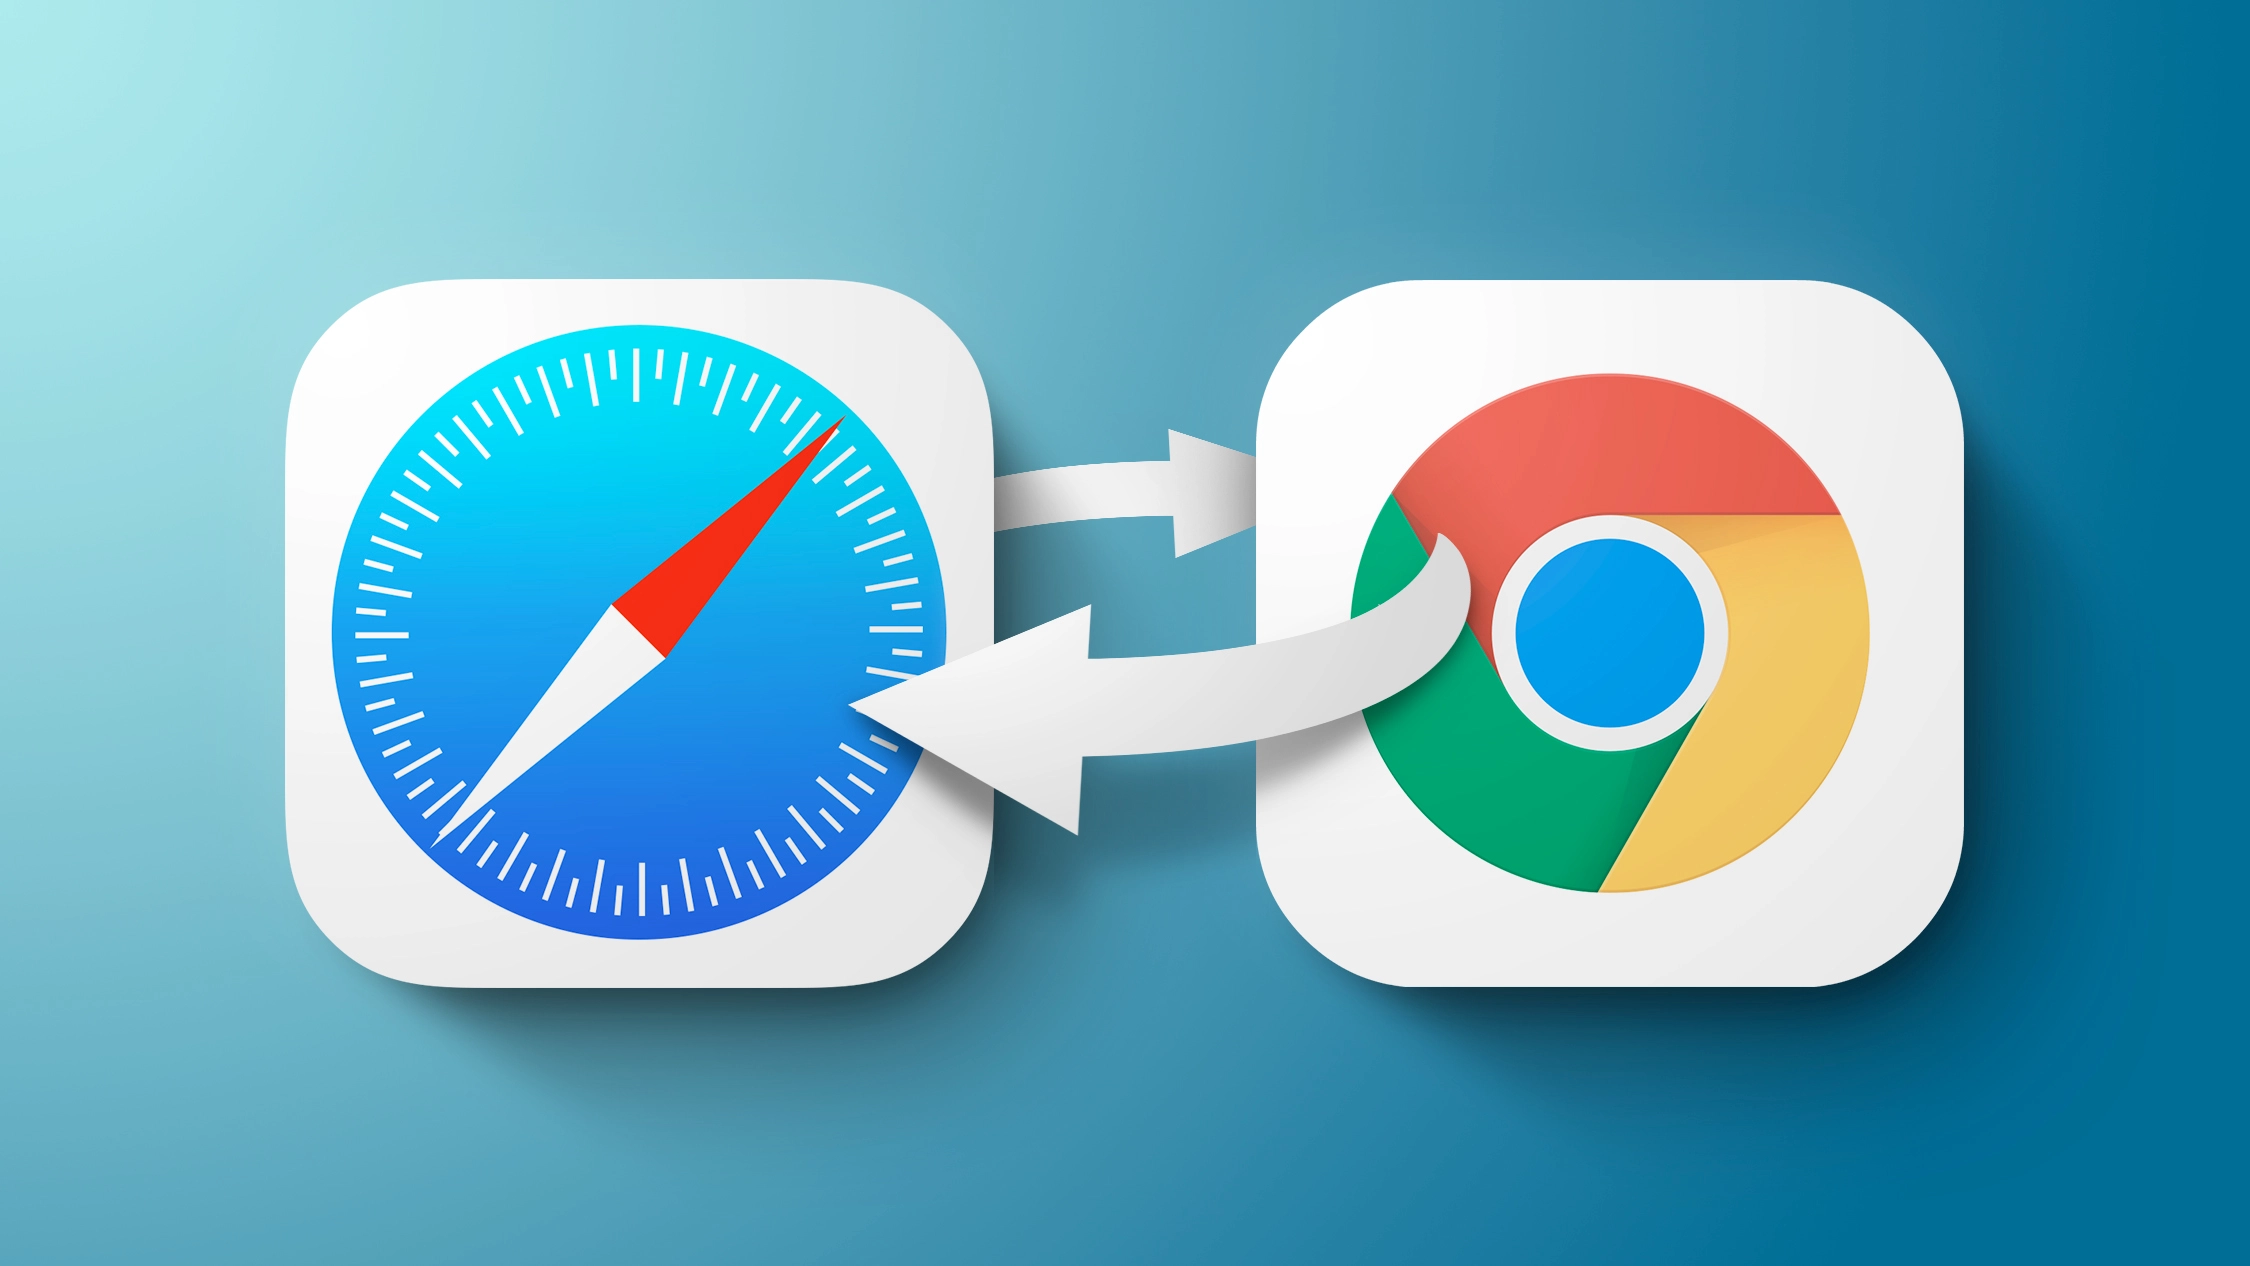 Chrome is better than Safari